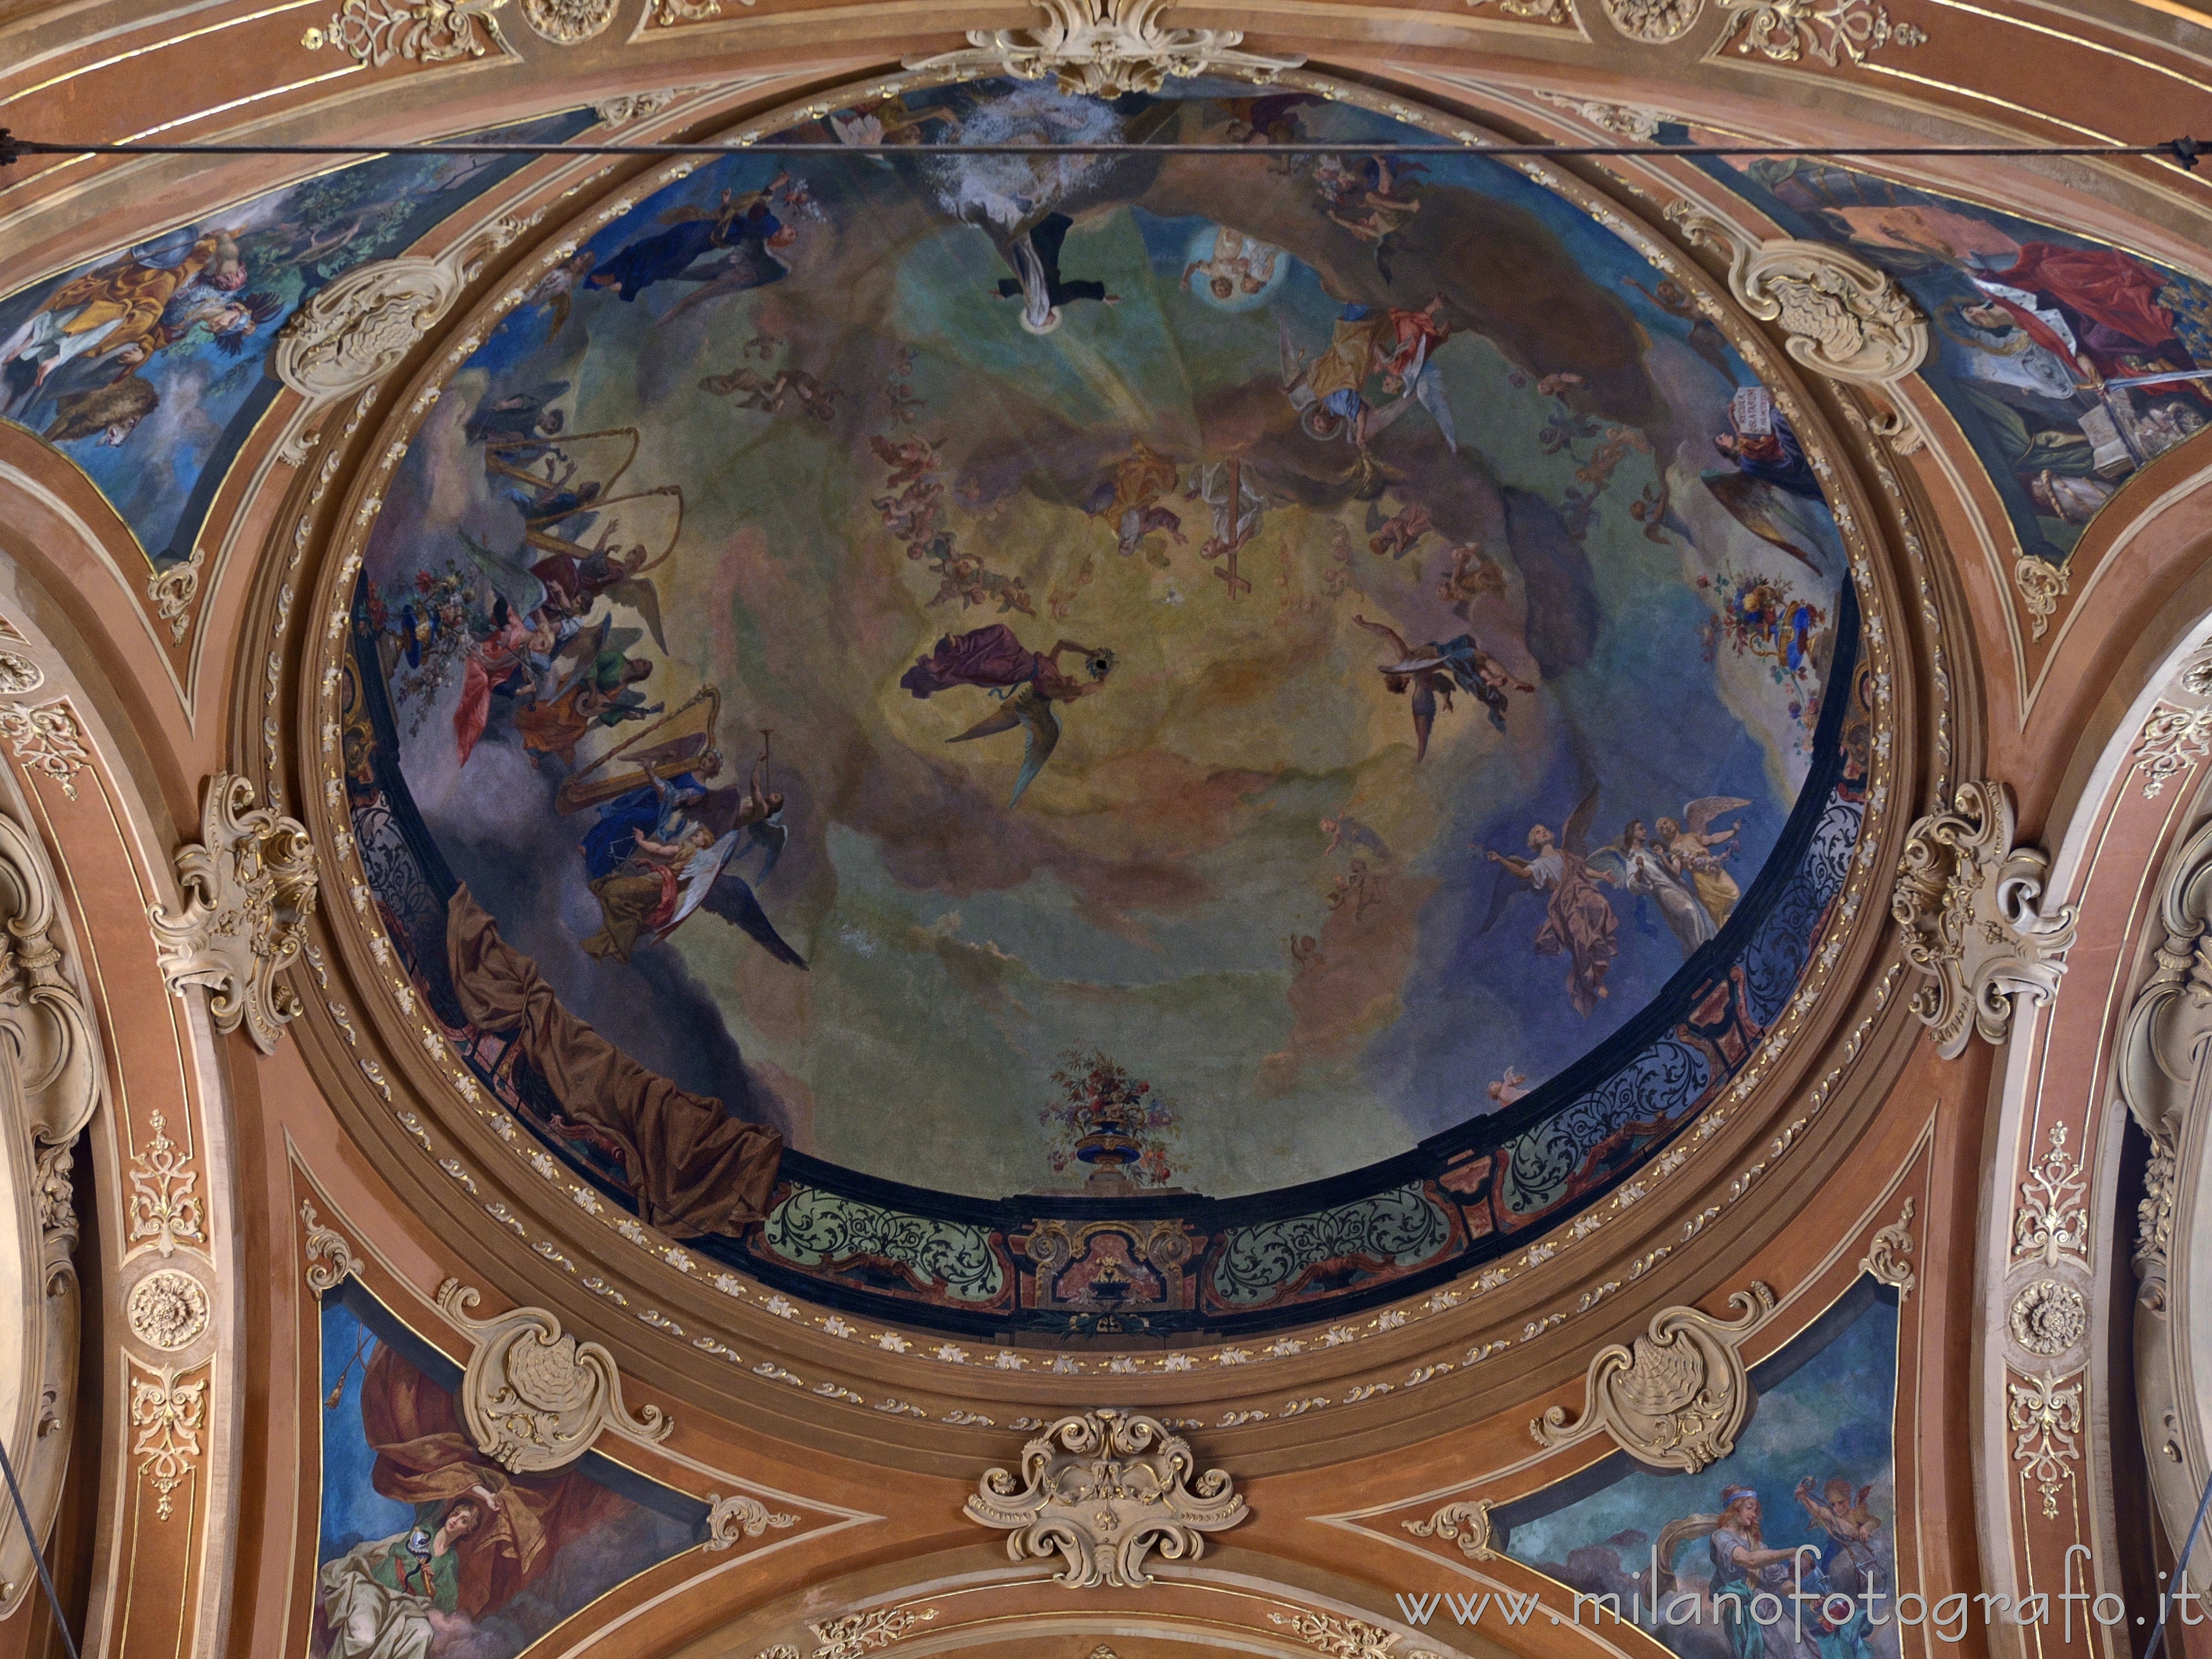 Milan (Italy): Frescoed dome above the entrance of the Church of Santa Francesca Romana - Milan (Italy)